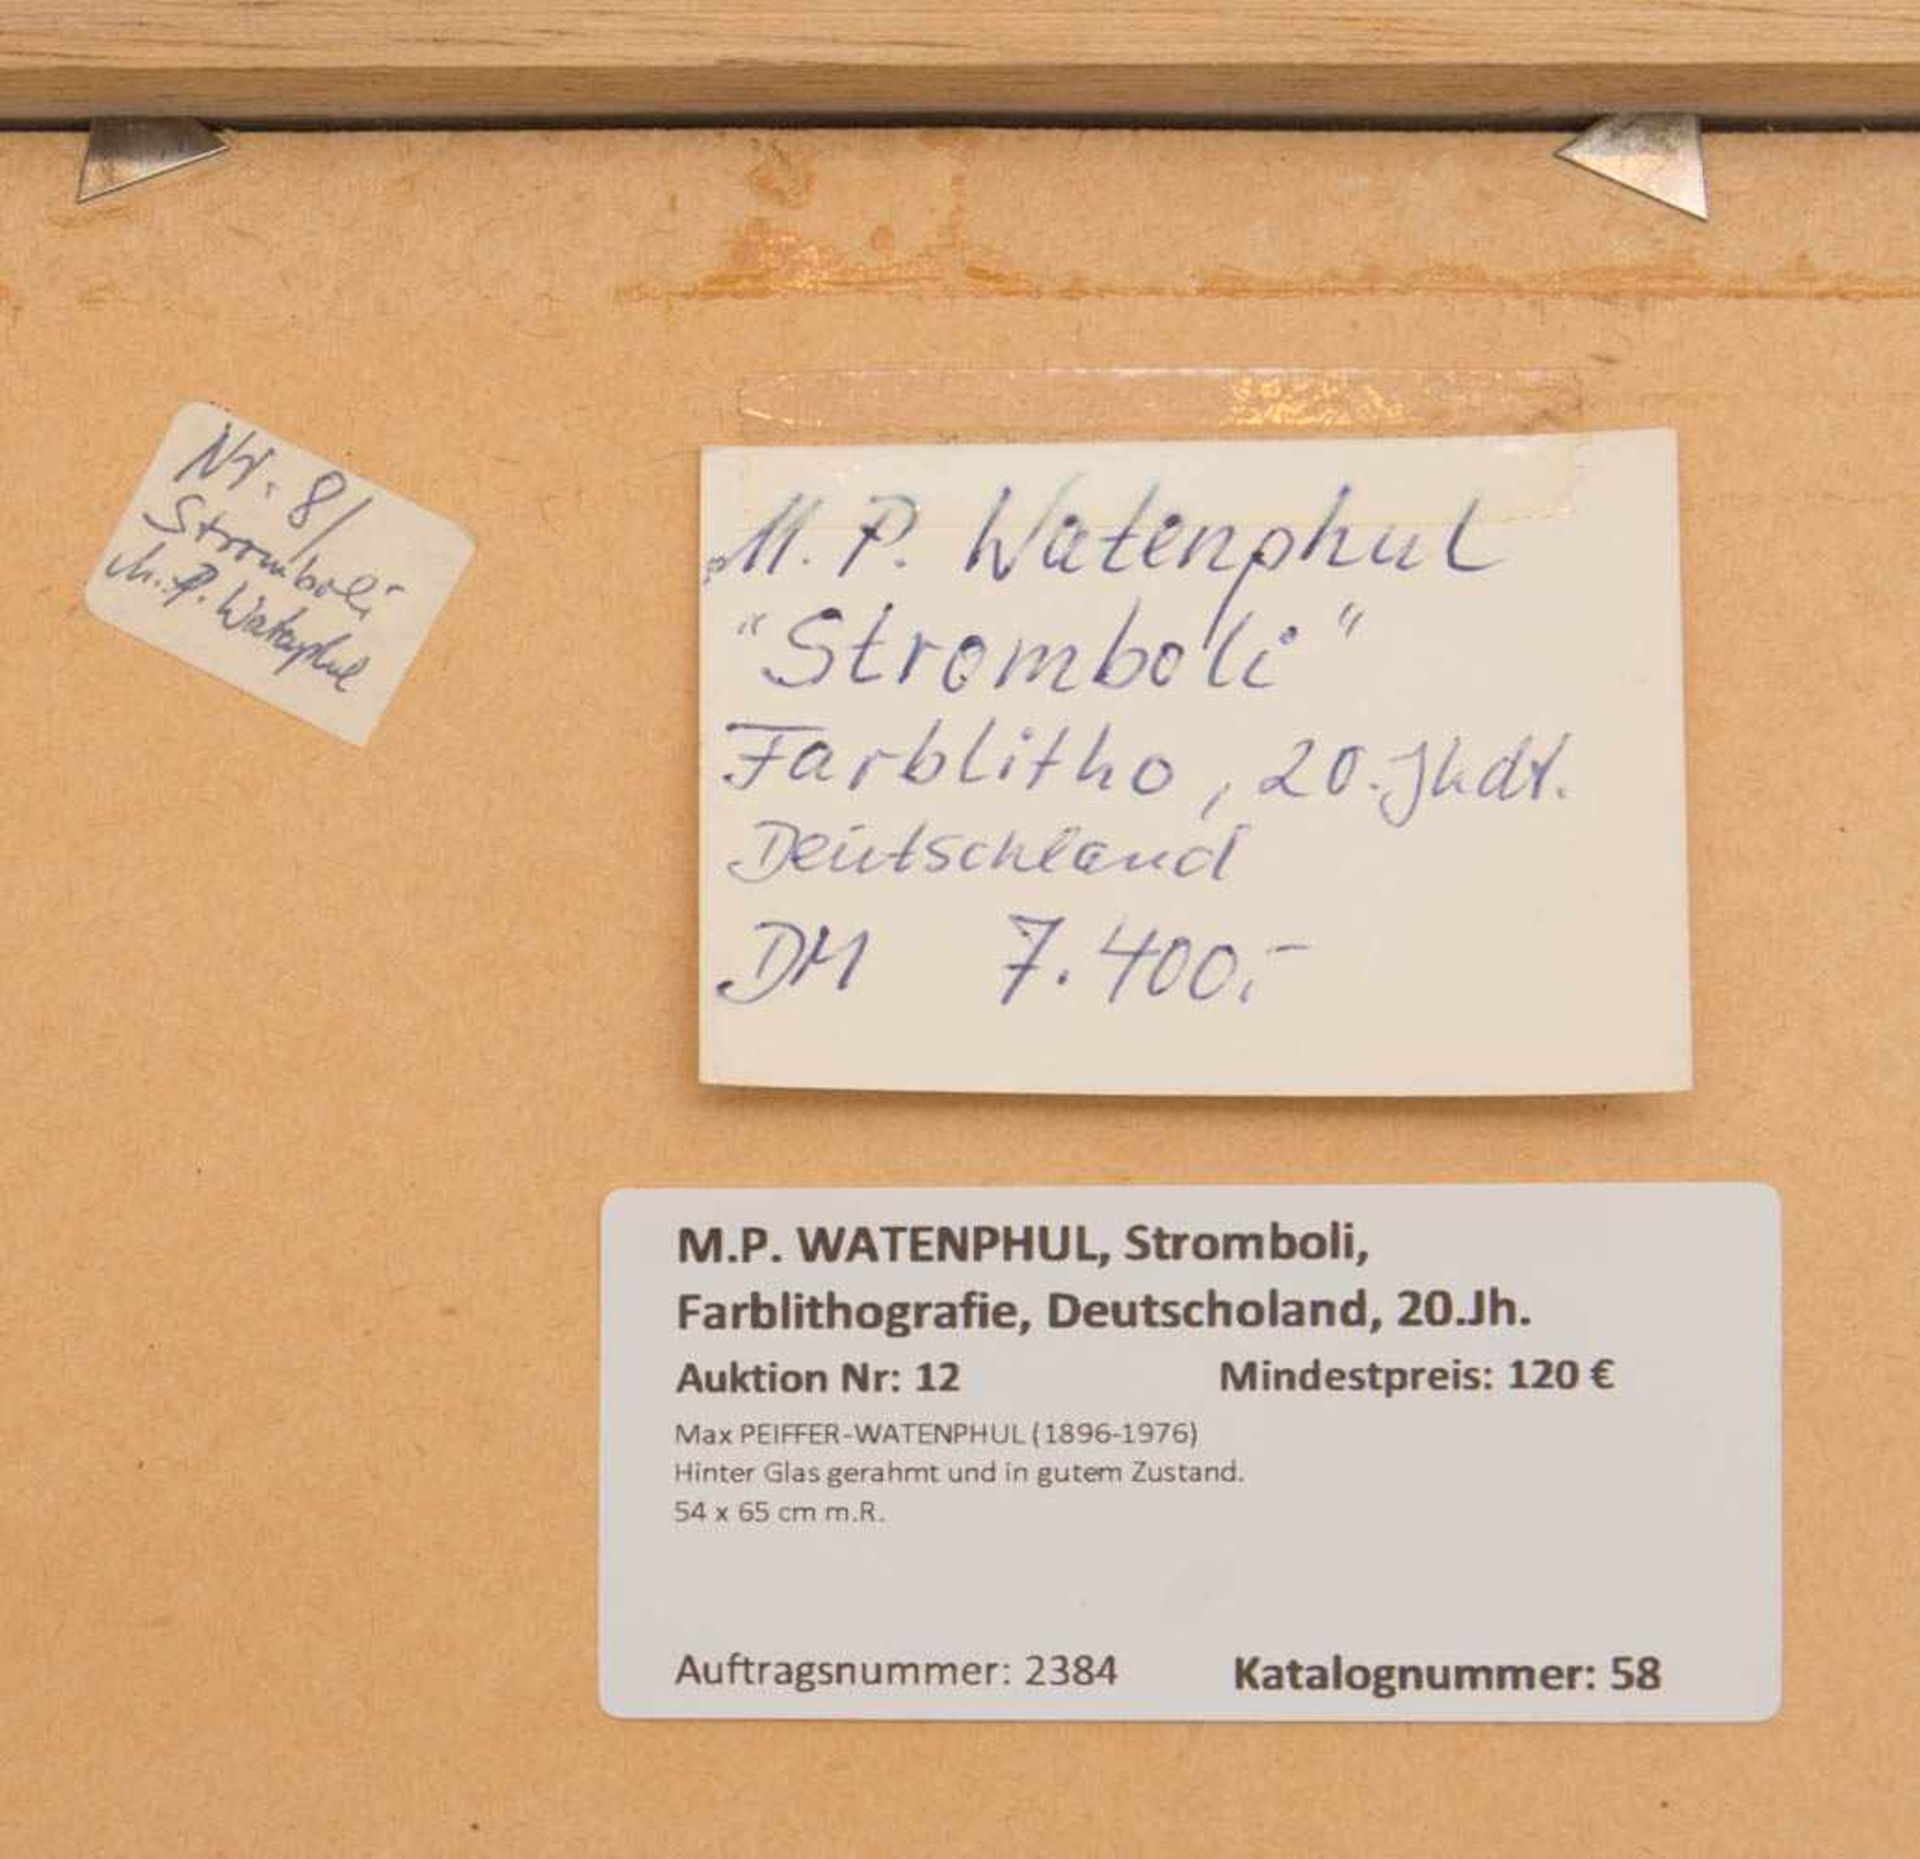 M.P. WATENPHUL, Stromboli, Farblithografie, Deutscholand, 20.Jh.Max PEIFFER-WATENPHUL (1896-1976) - Bild 5 aus 5